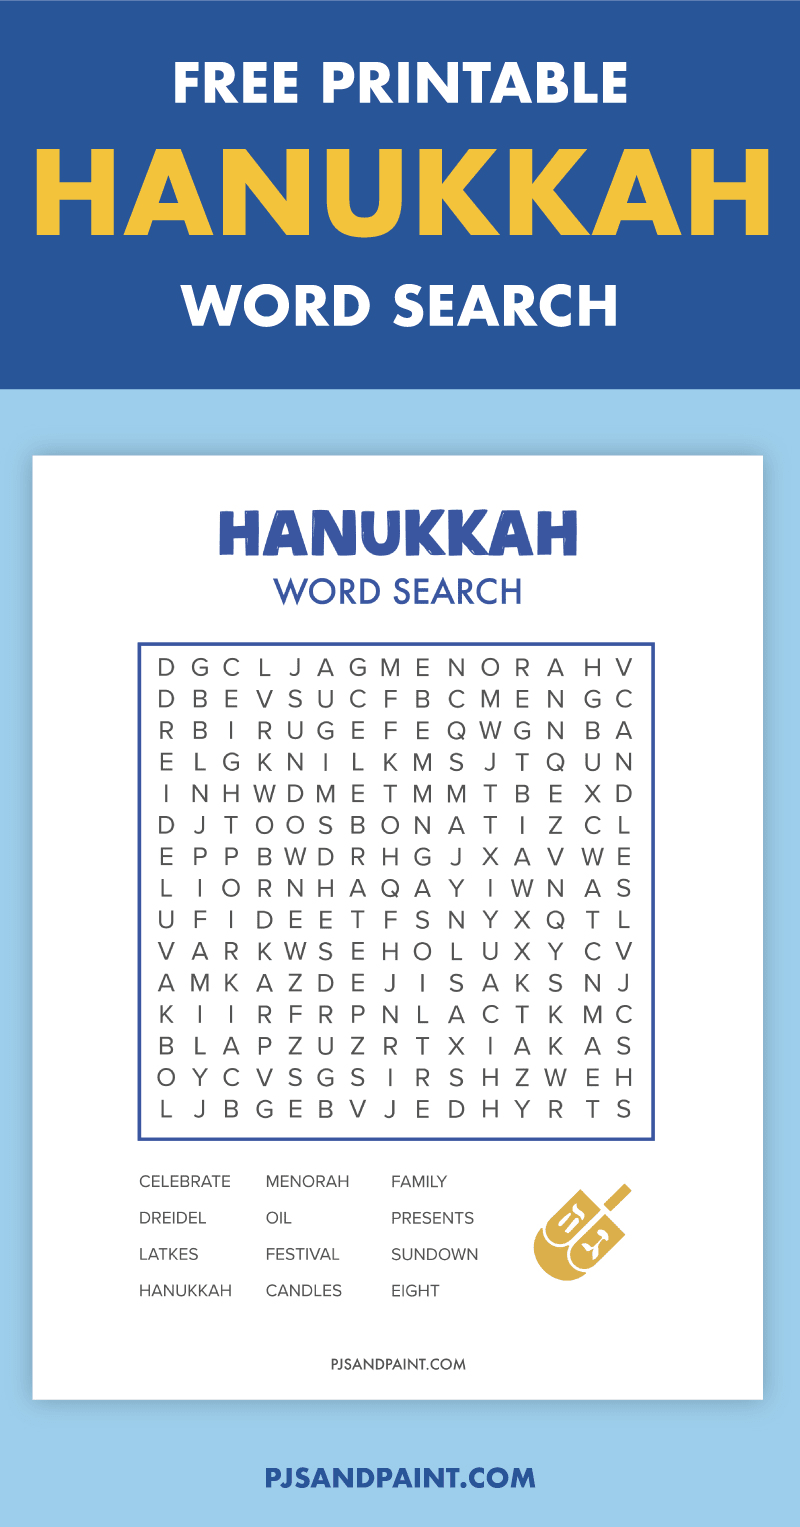 Free printable hanukkah word search